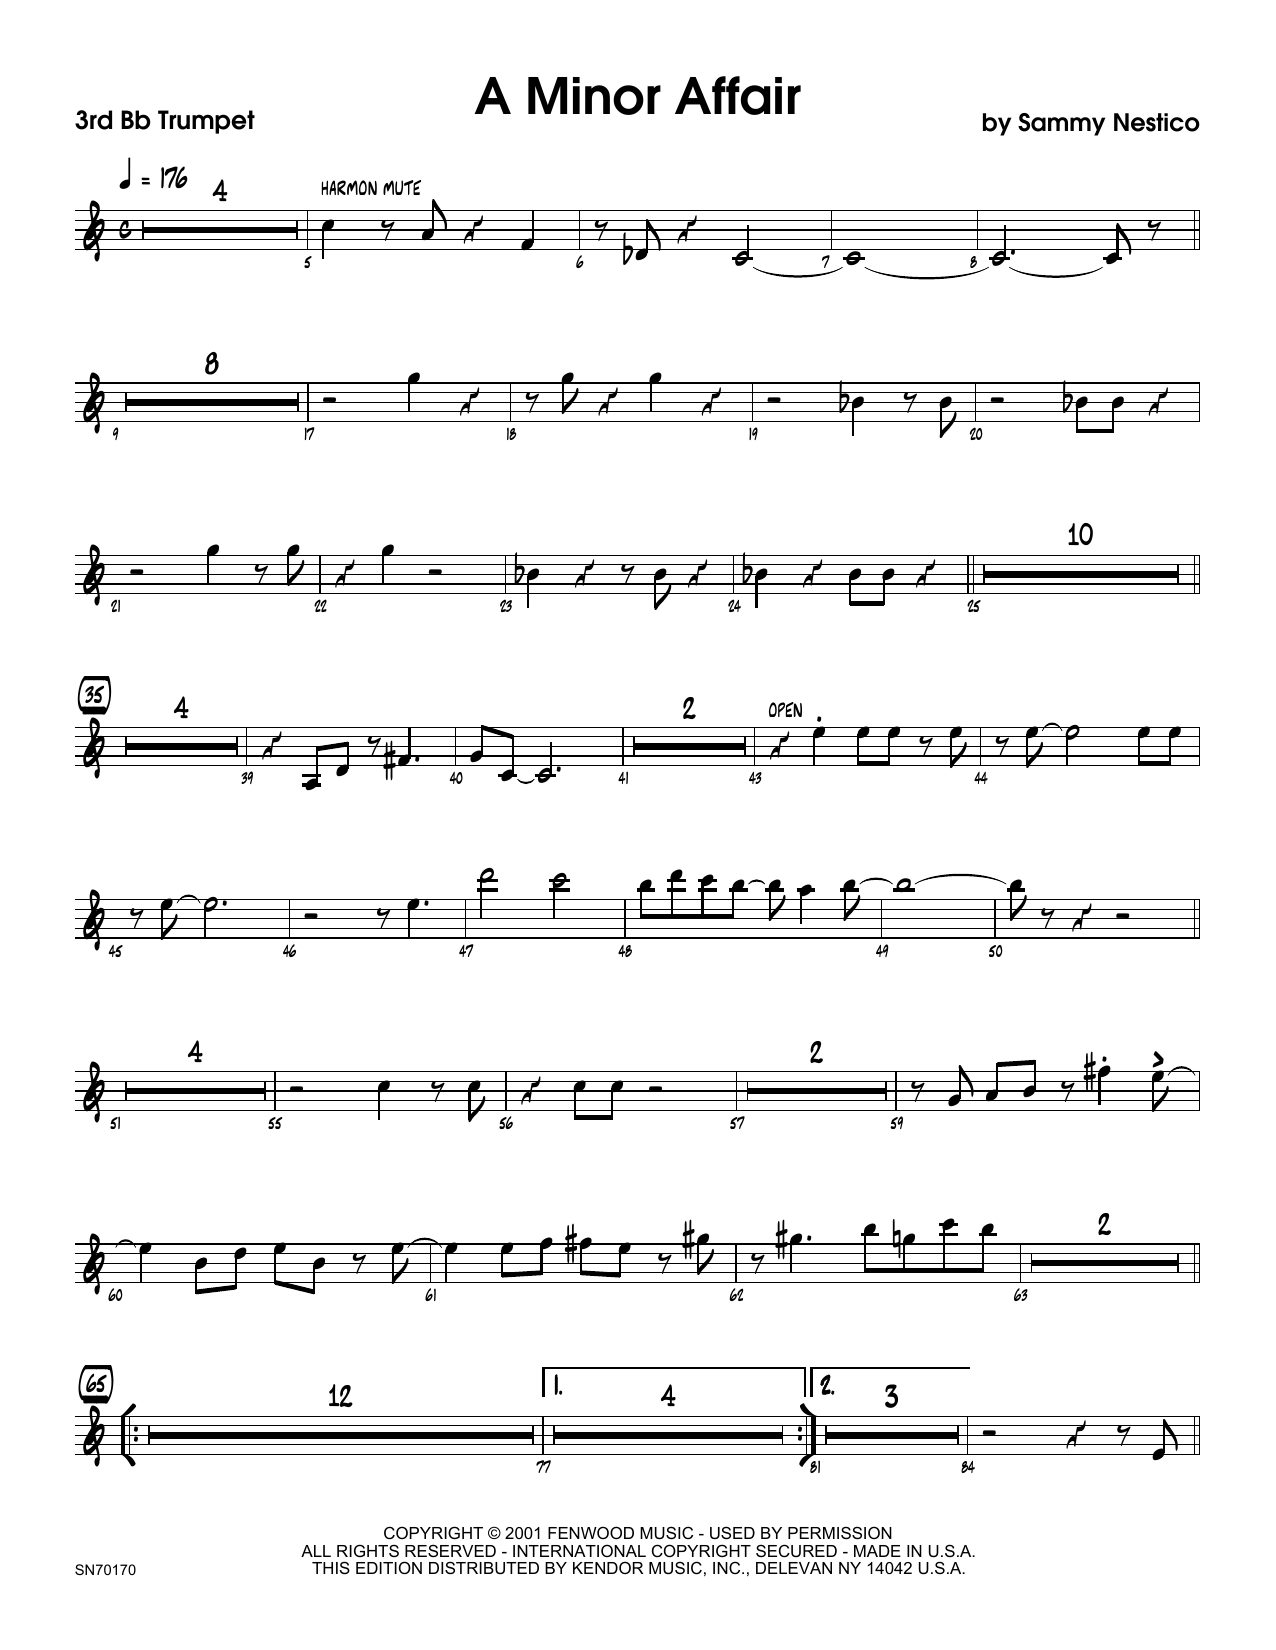 Download Sammy Nestico A Minor Affair - 3rd Bb Trumpet Sheet Music